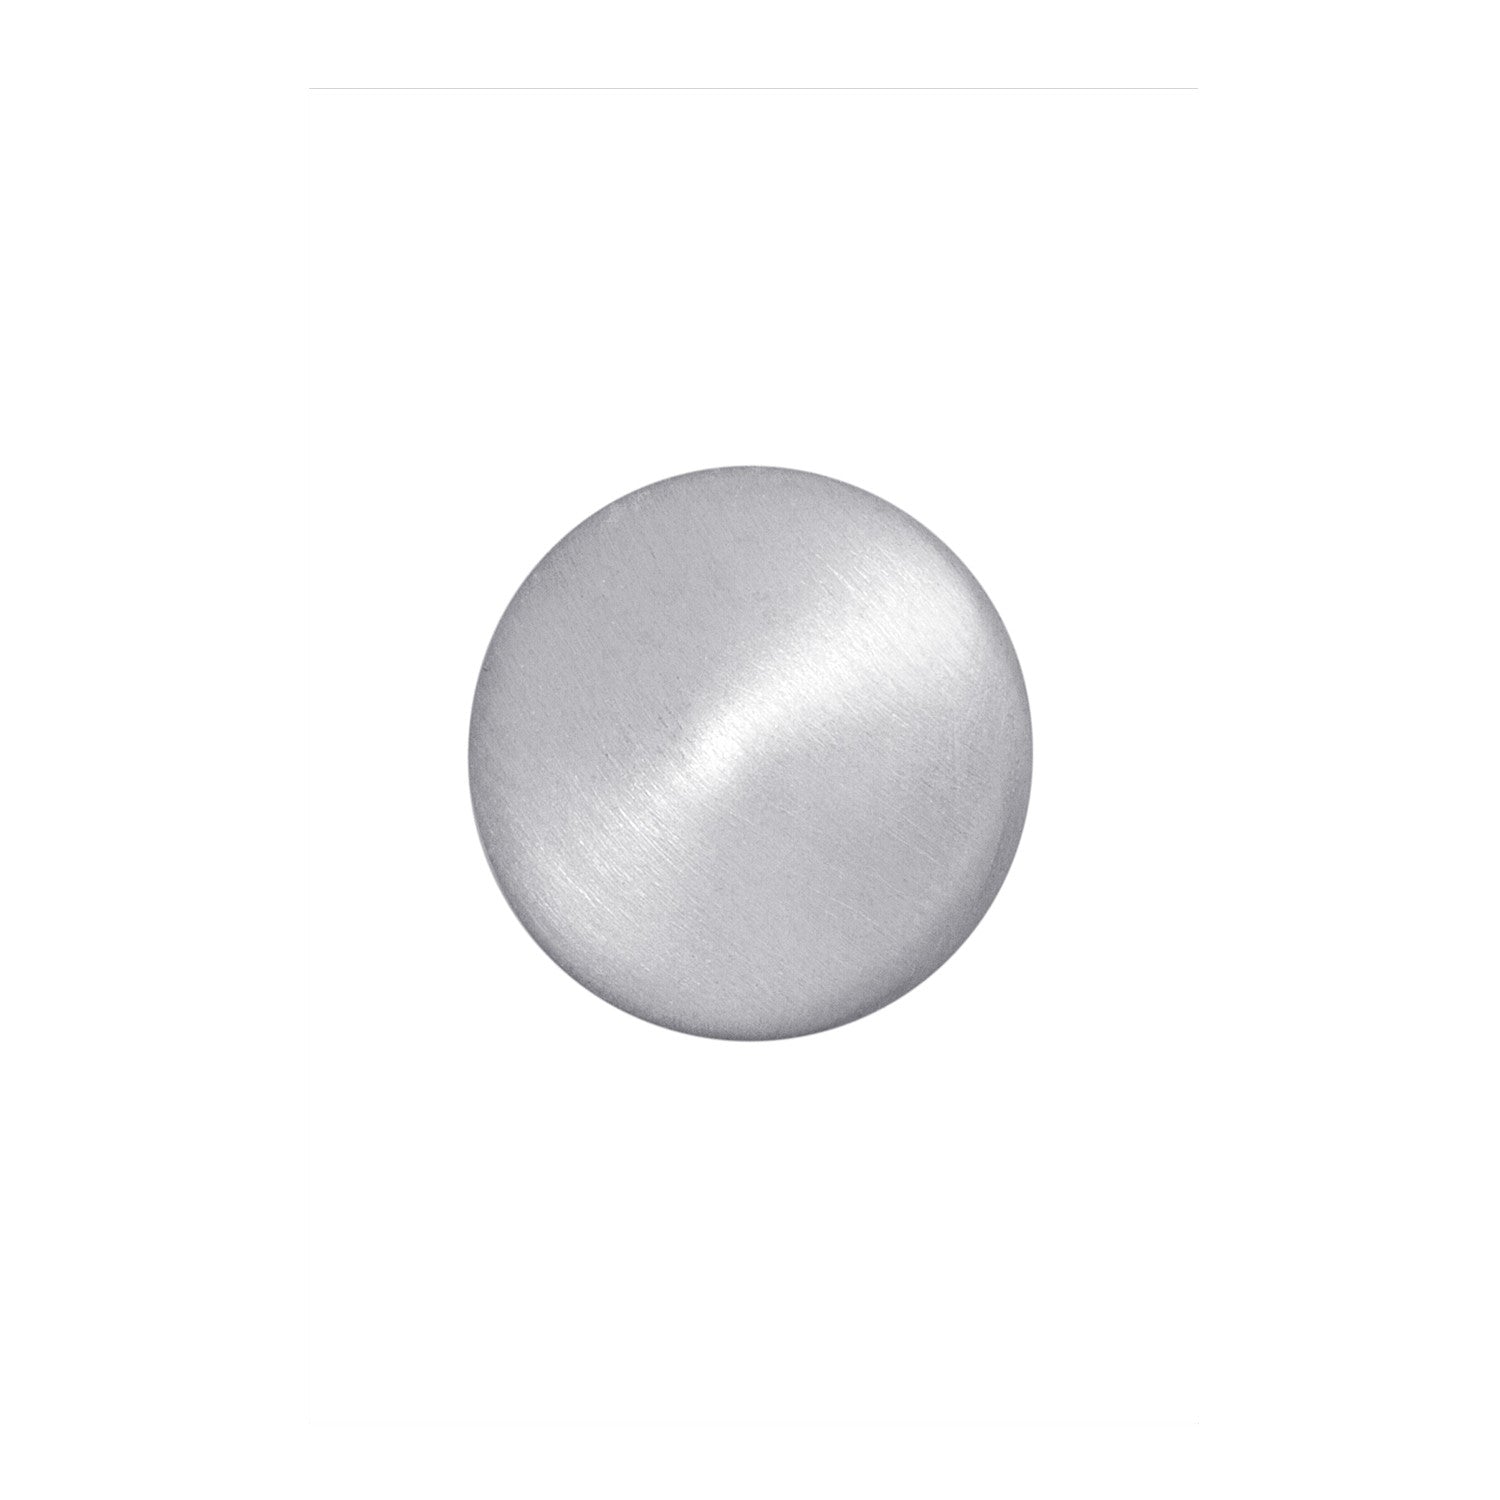 silver pin